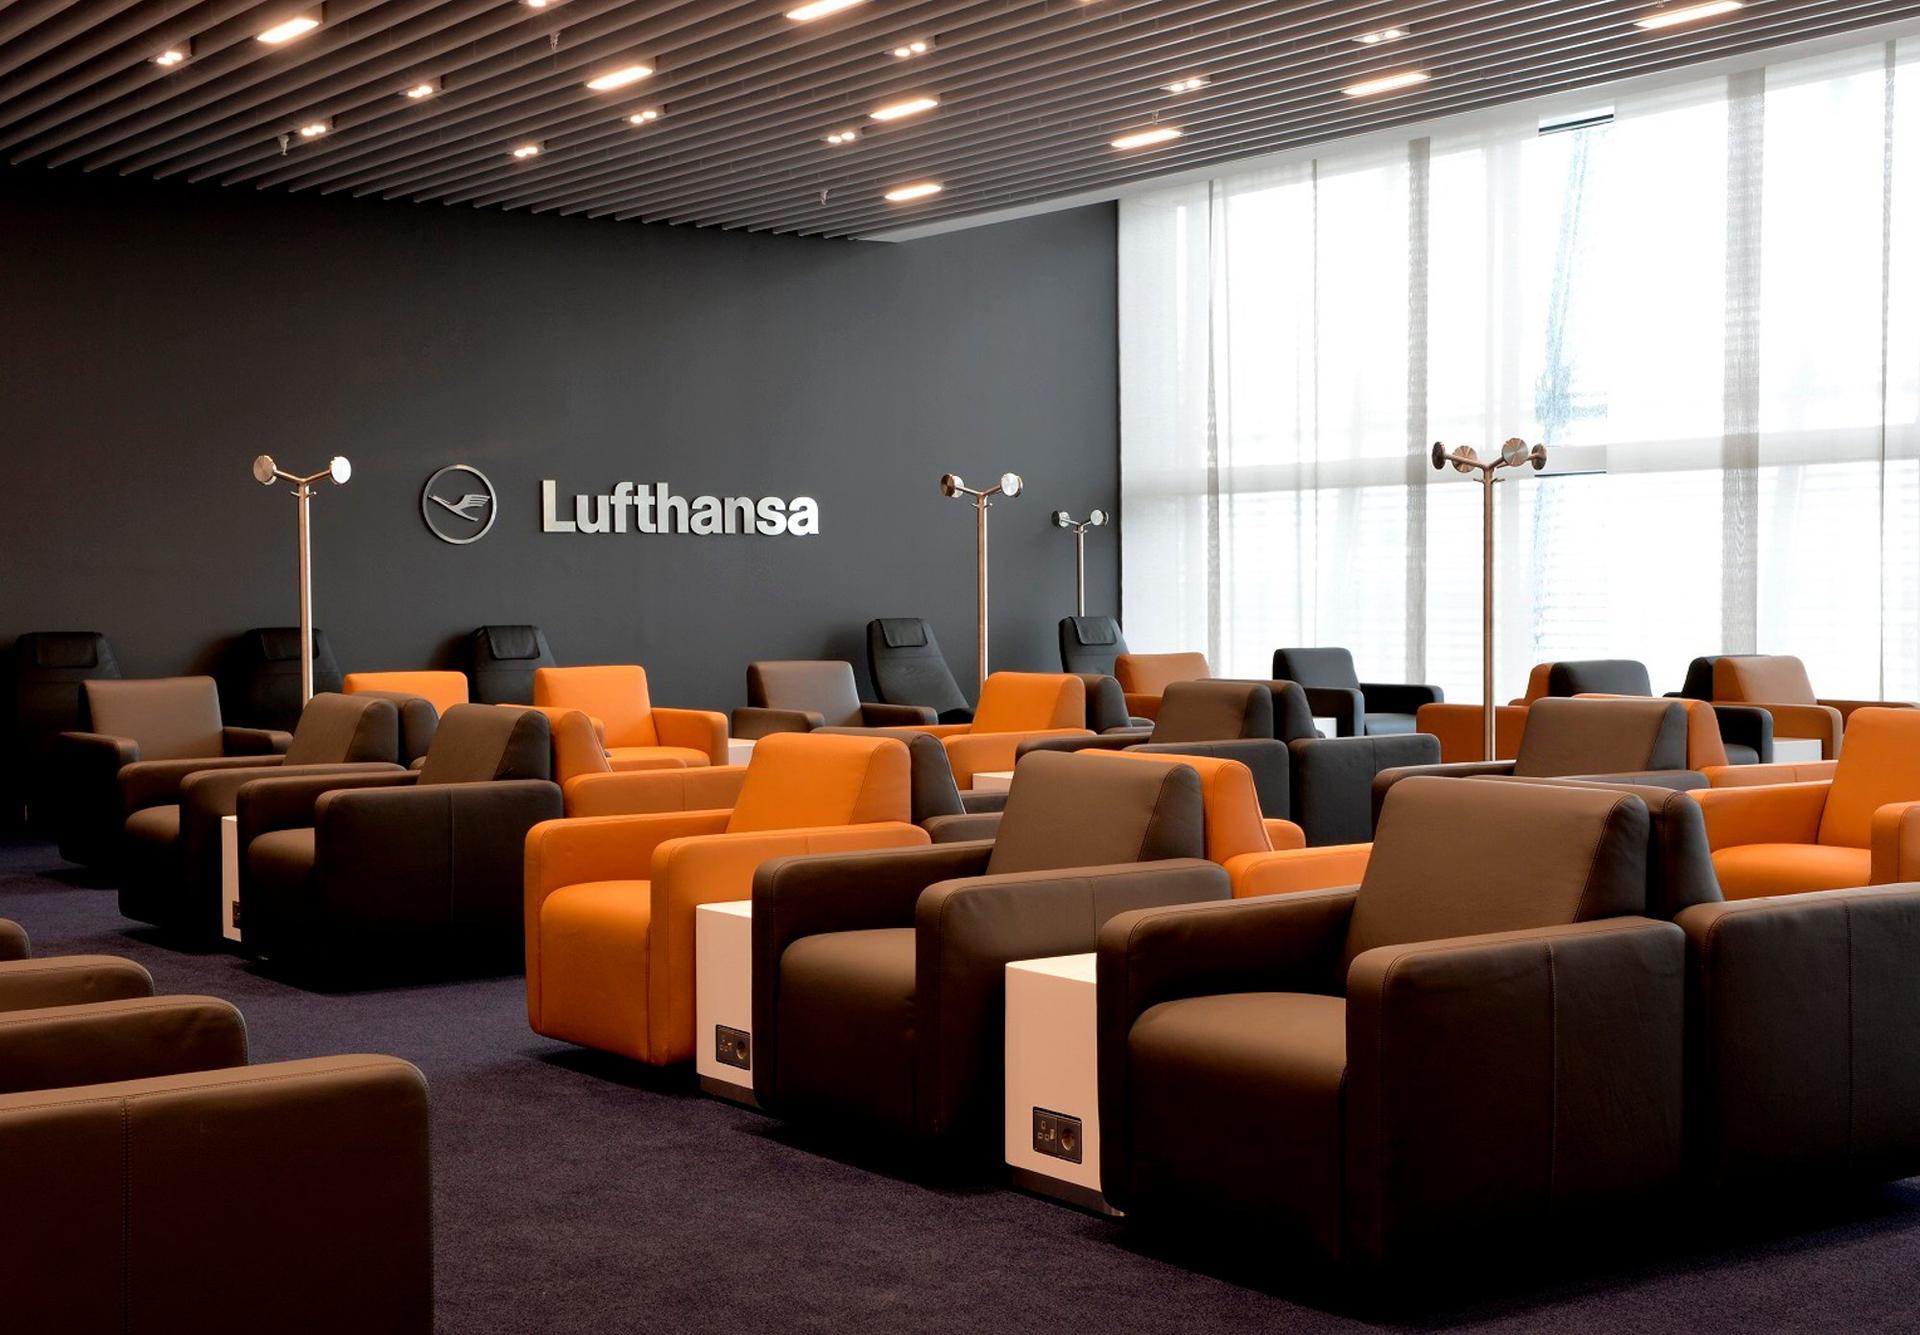 Lufthansa Business Lounge image 14 of 19